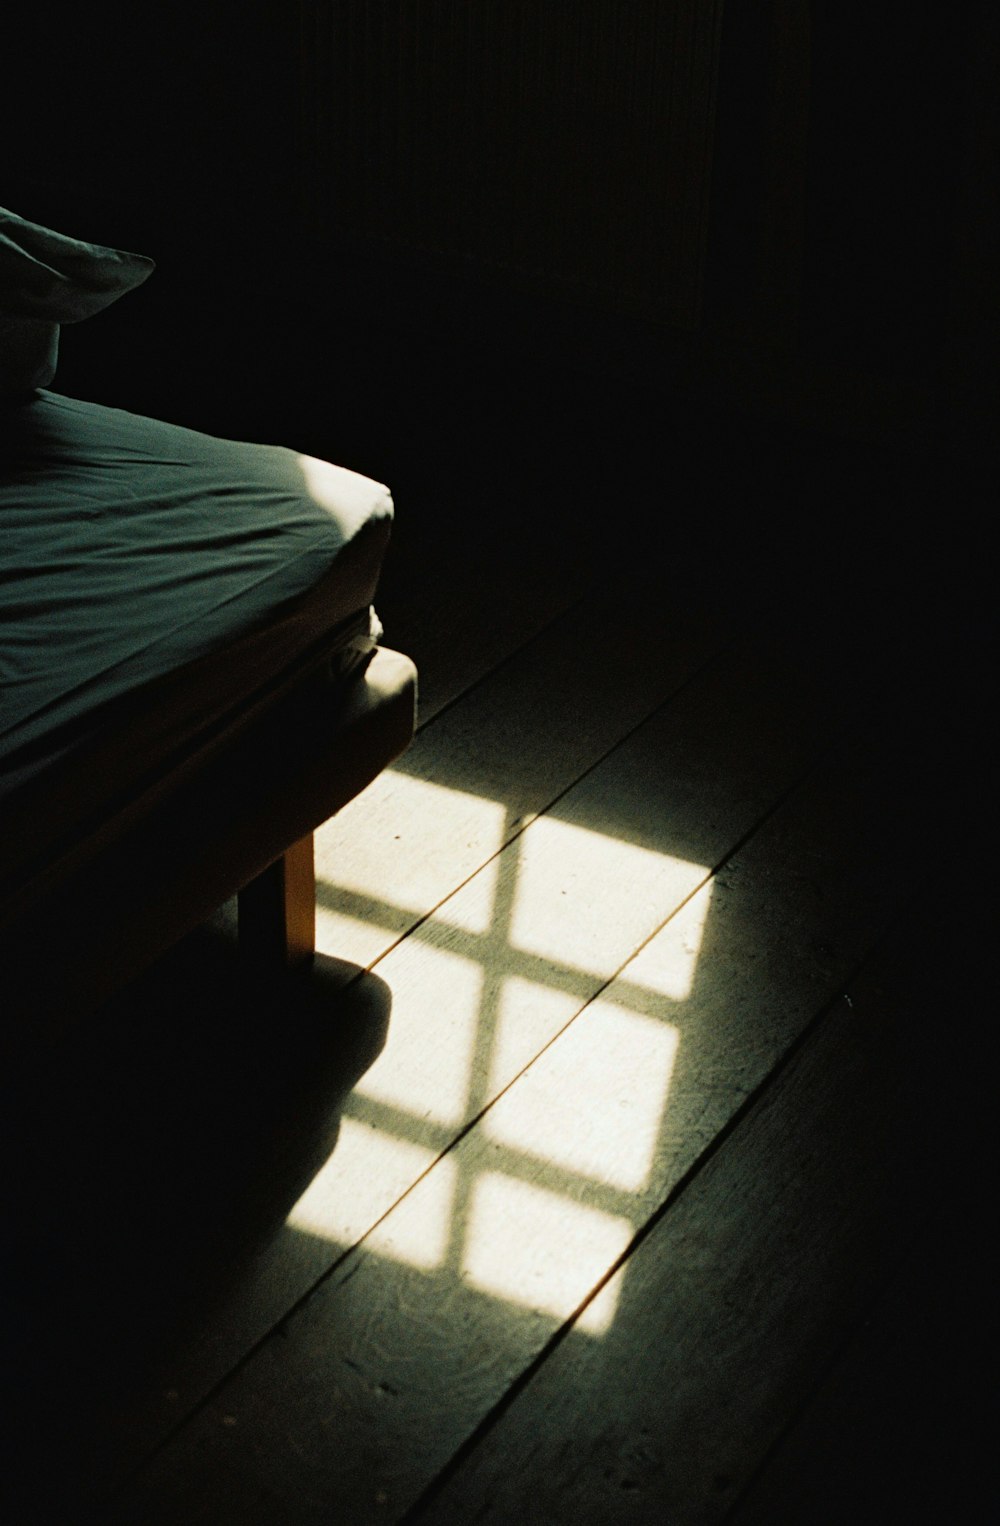 reflection of window on brown wooden floor